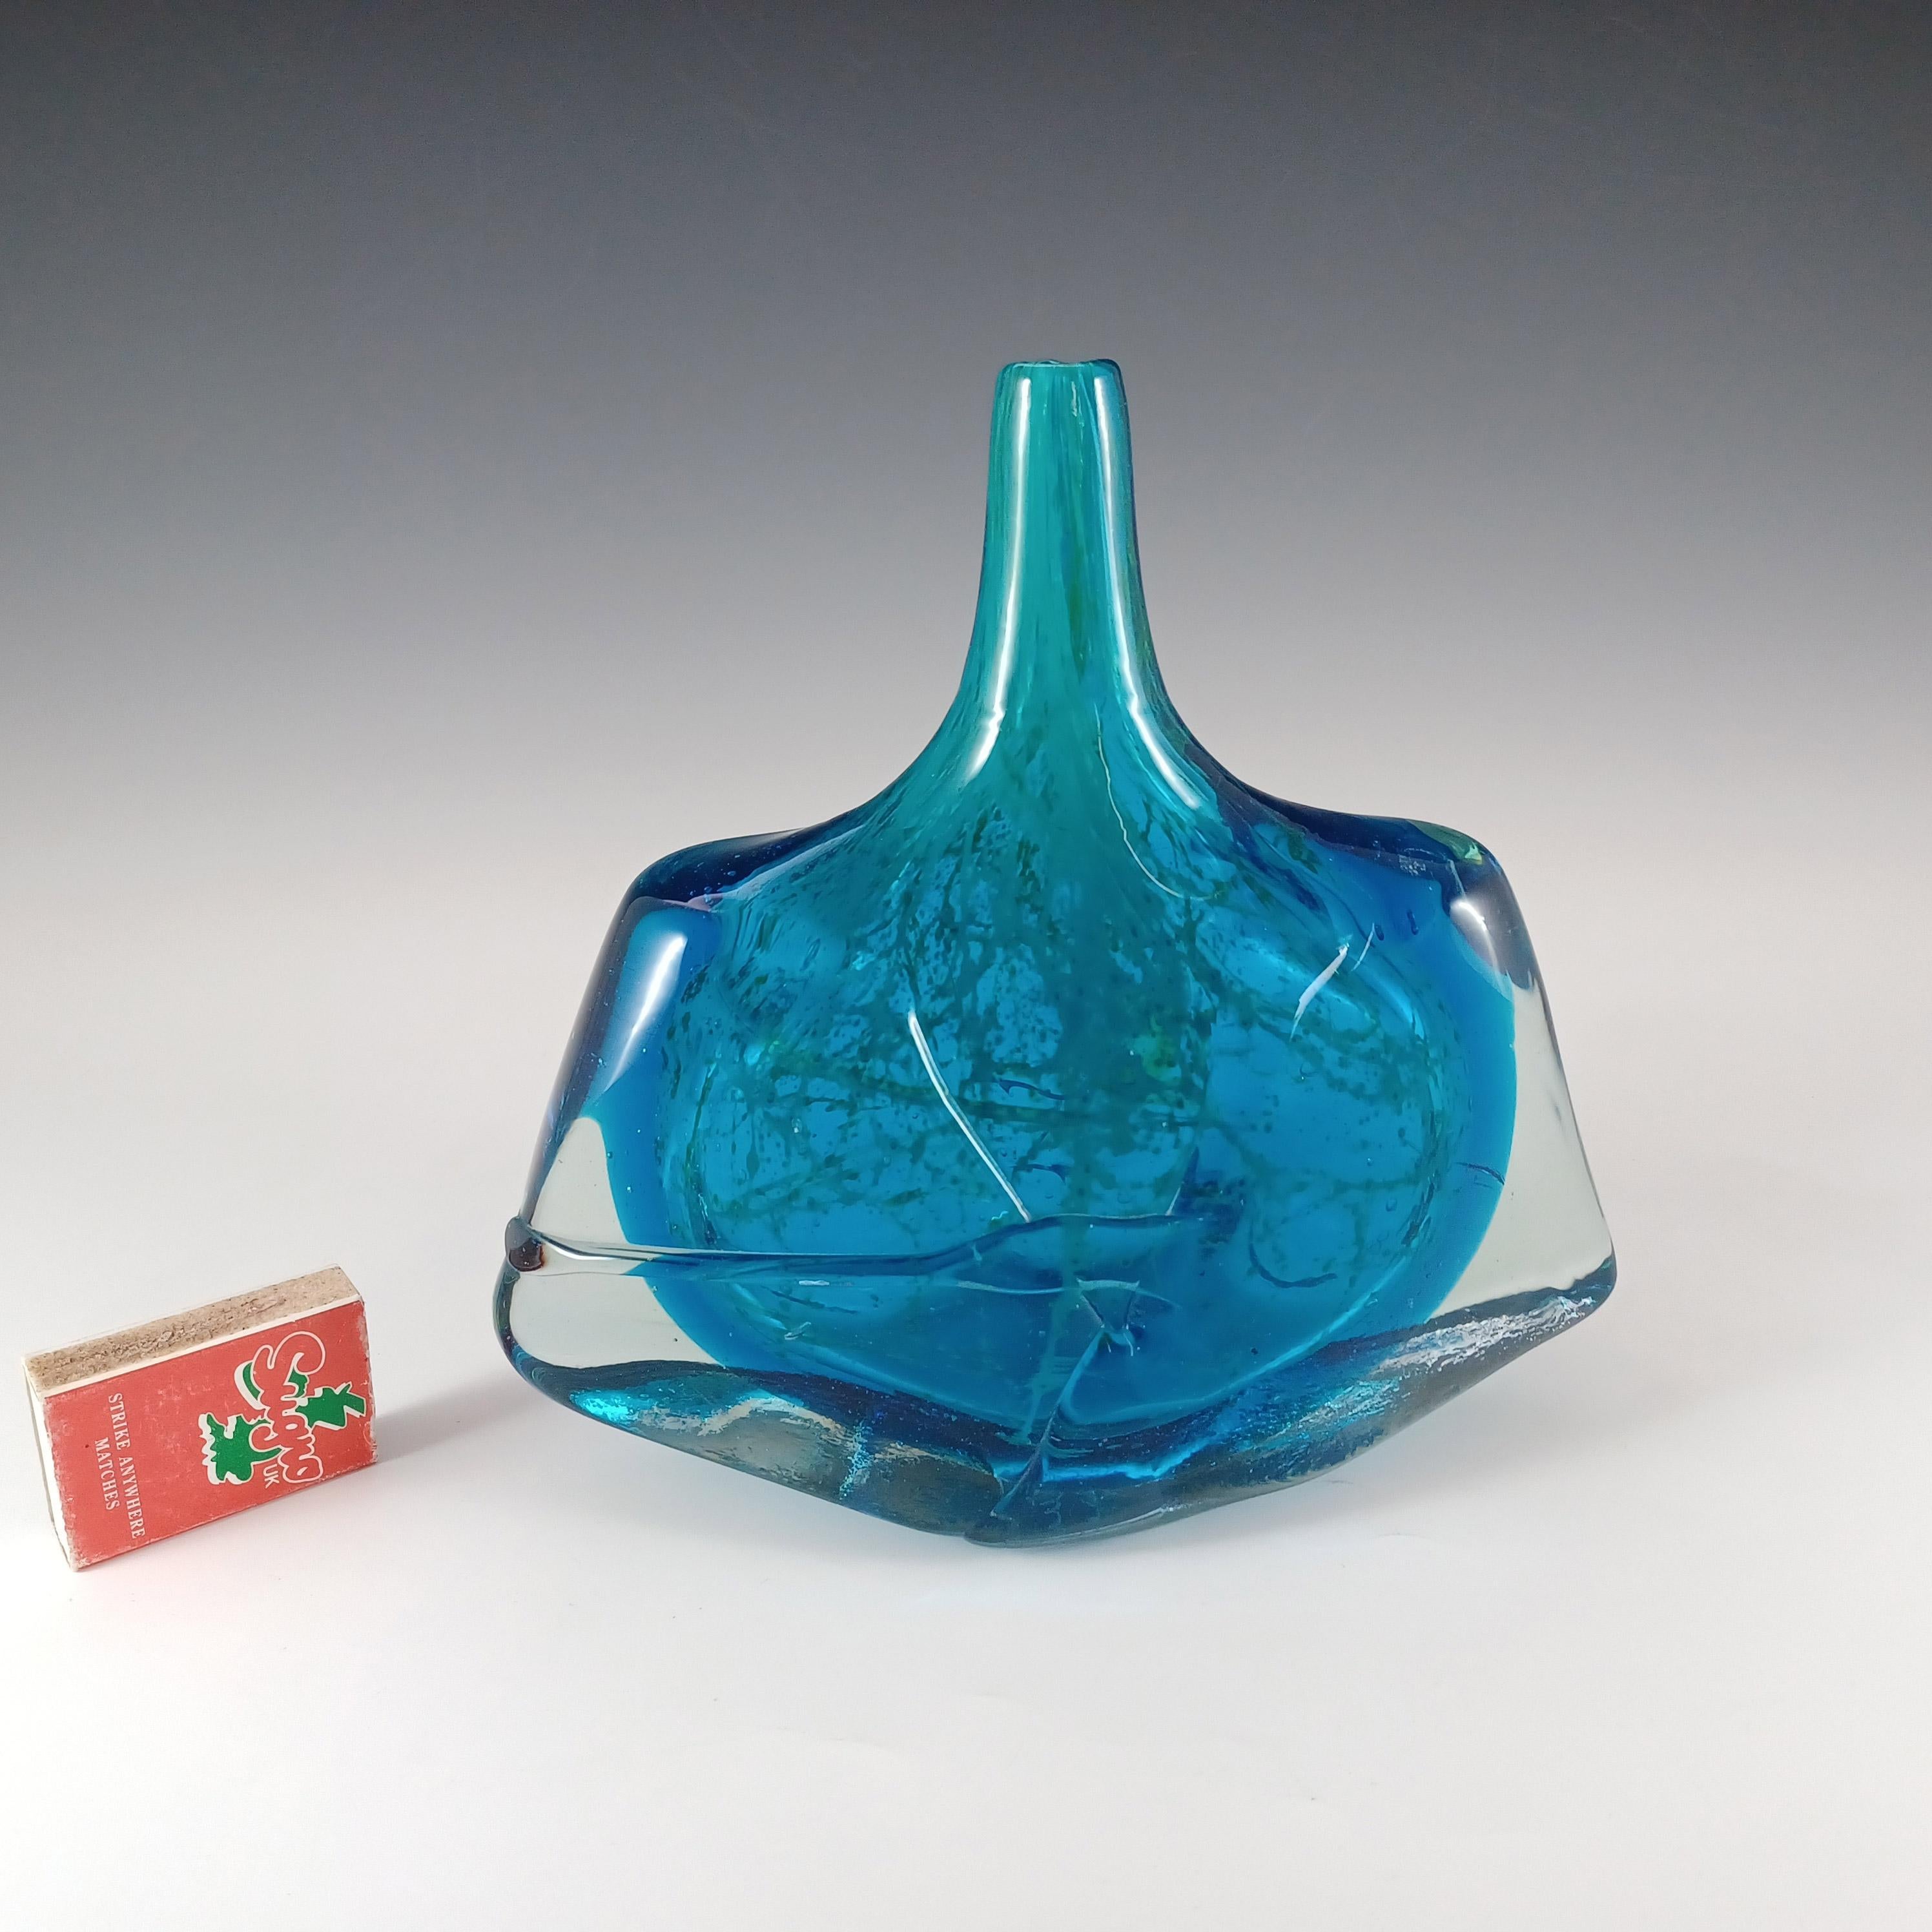 Mdina Maltese Blue Glass 'Fish' / 'Axe Head' Vase - Signed 1979 For Sale 5